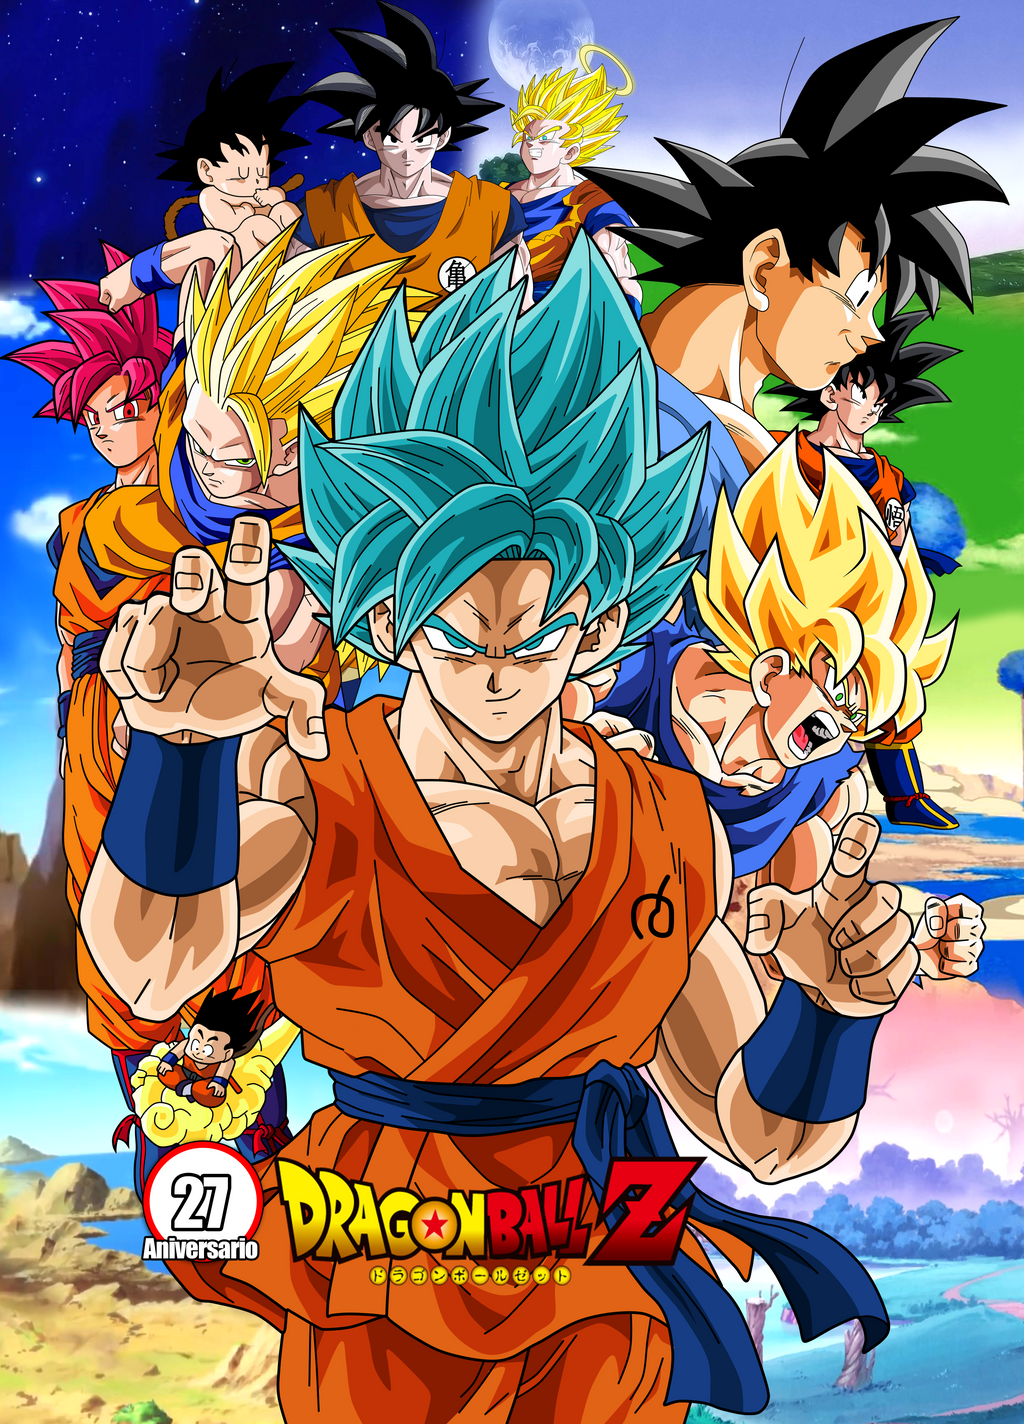 Poster Dragon Ball Z 27 Aniversario by FacuDibuja on DeviantArt